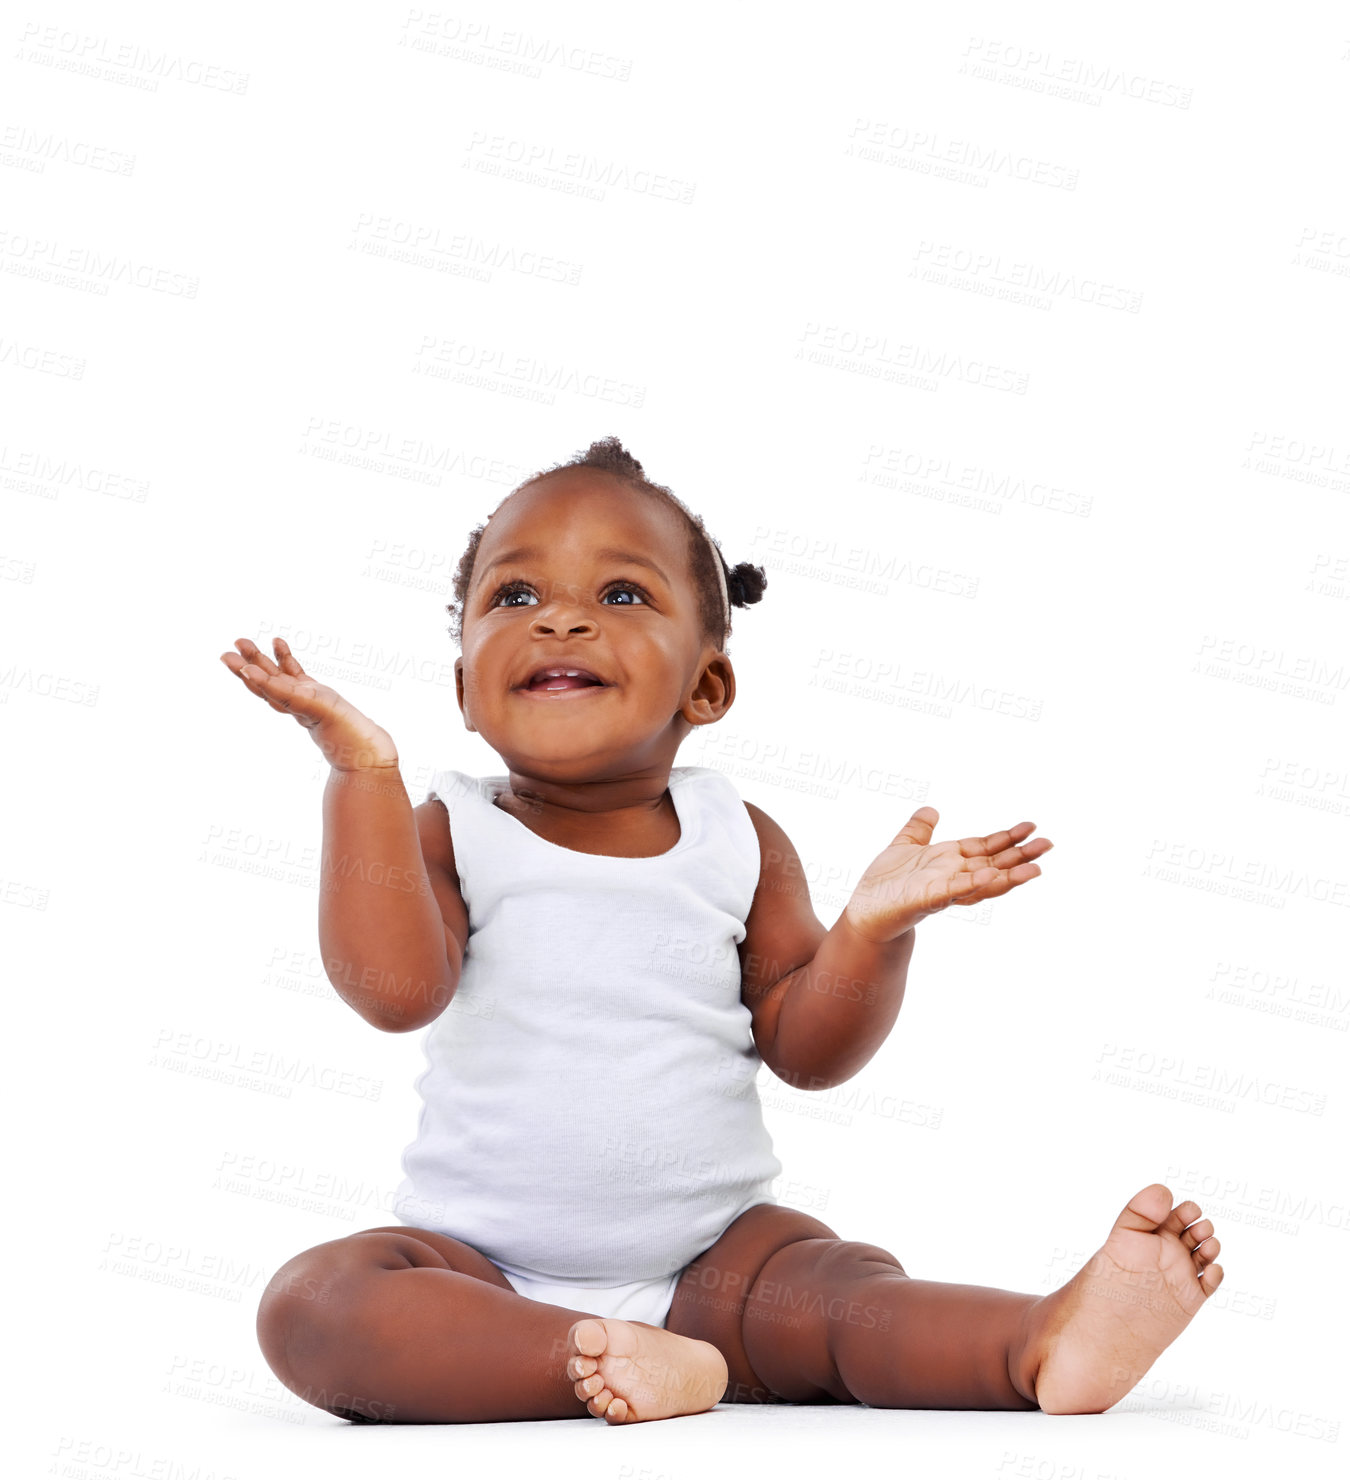 Buy stock photo Studio shot of an adorable baby girl isolated on white